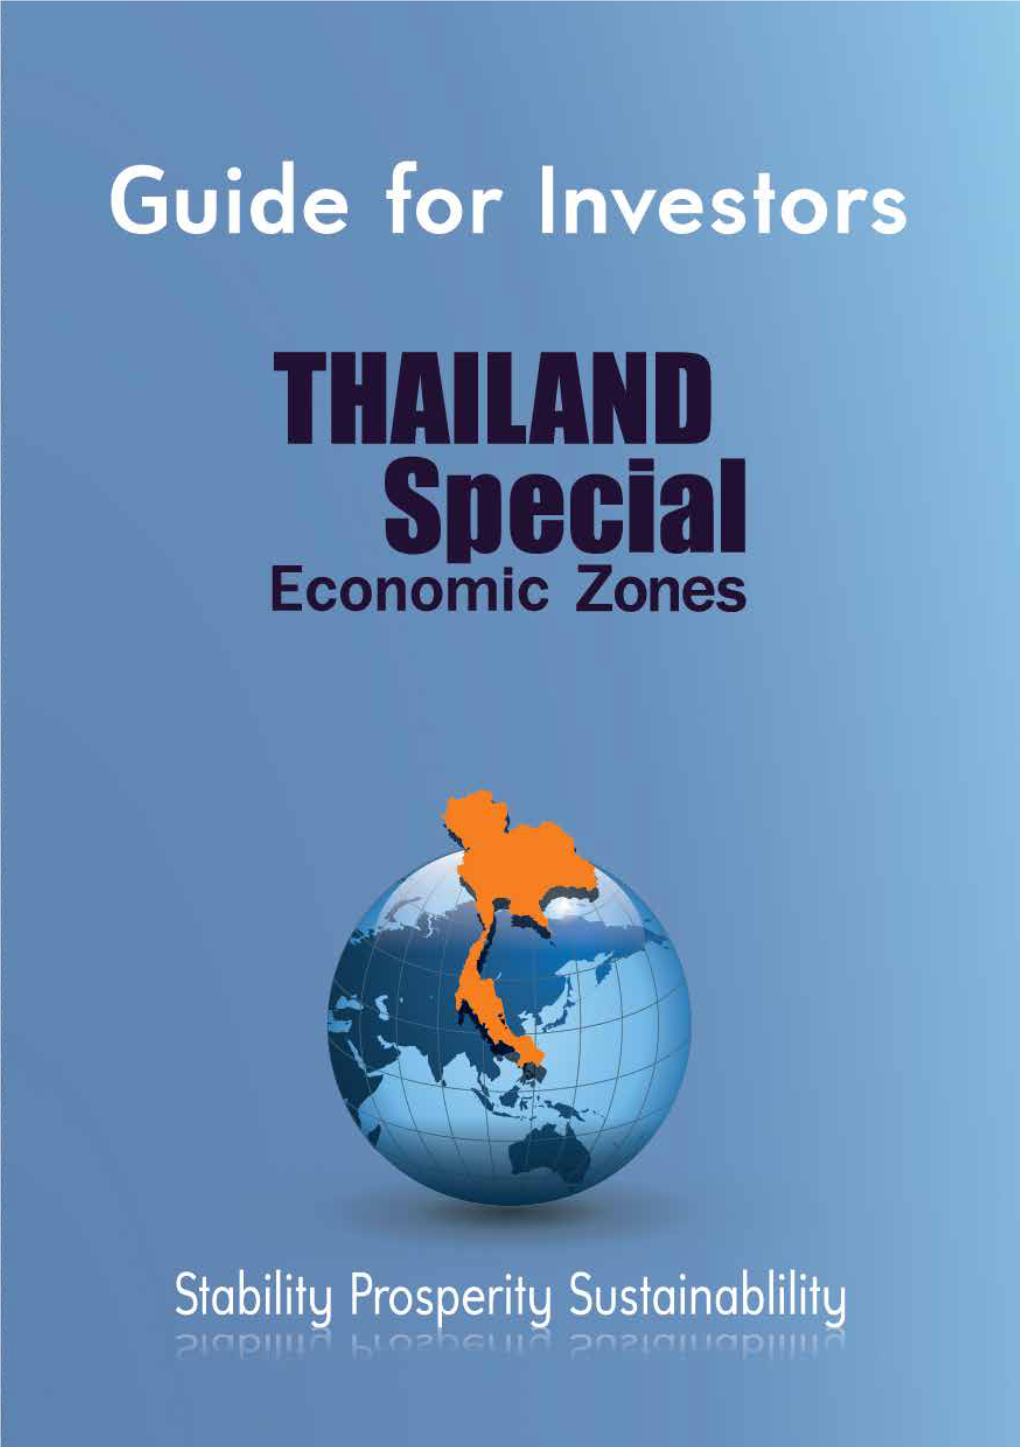 THAILAND SPECIAL Economic Zones 1 2 THAILAND SPECIAL Economic Zones Table of Contents What Are Special Economic Zones? 1